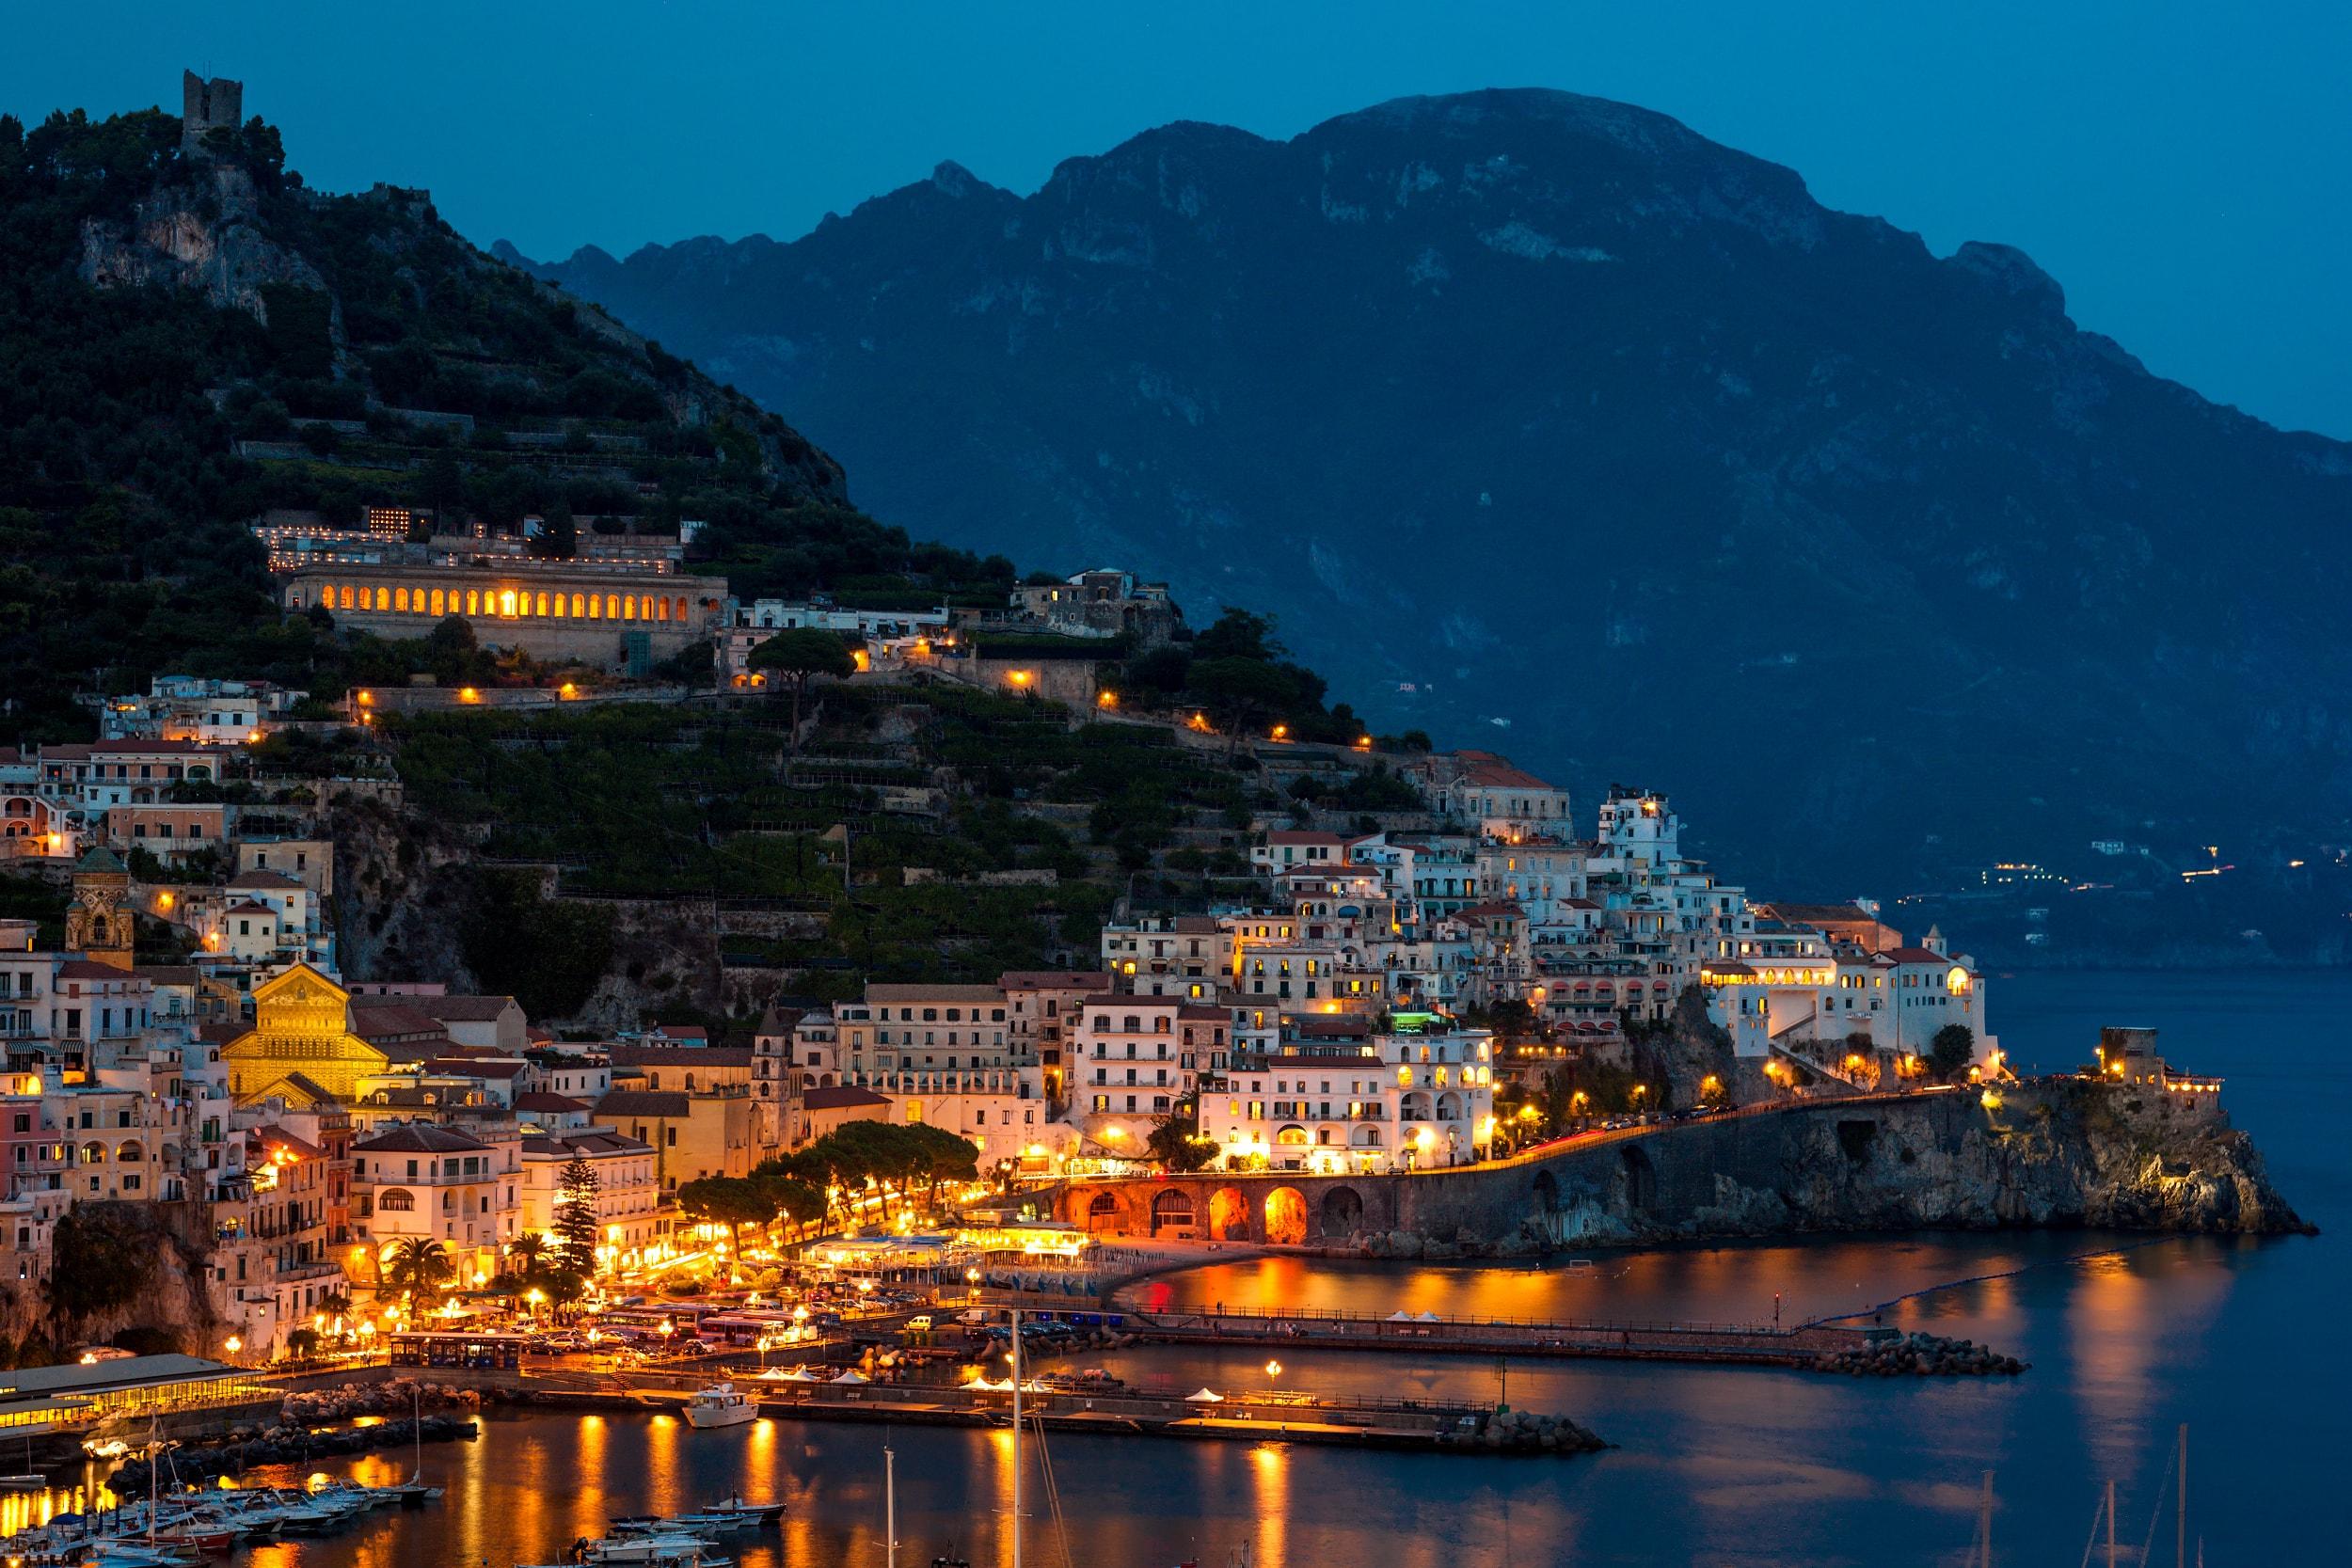 Italy nightlife image